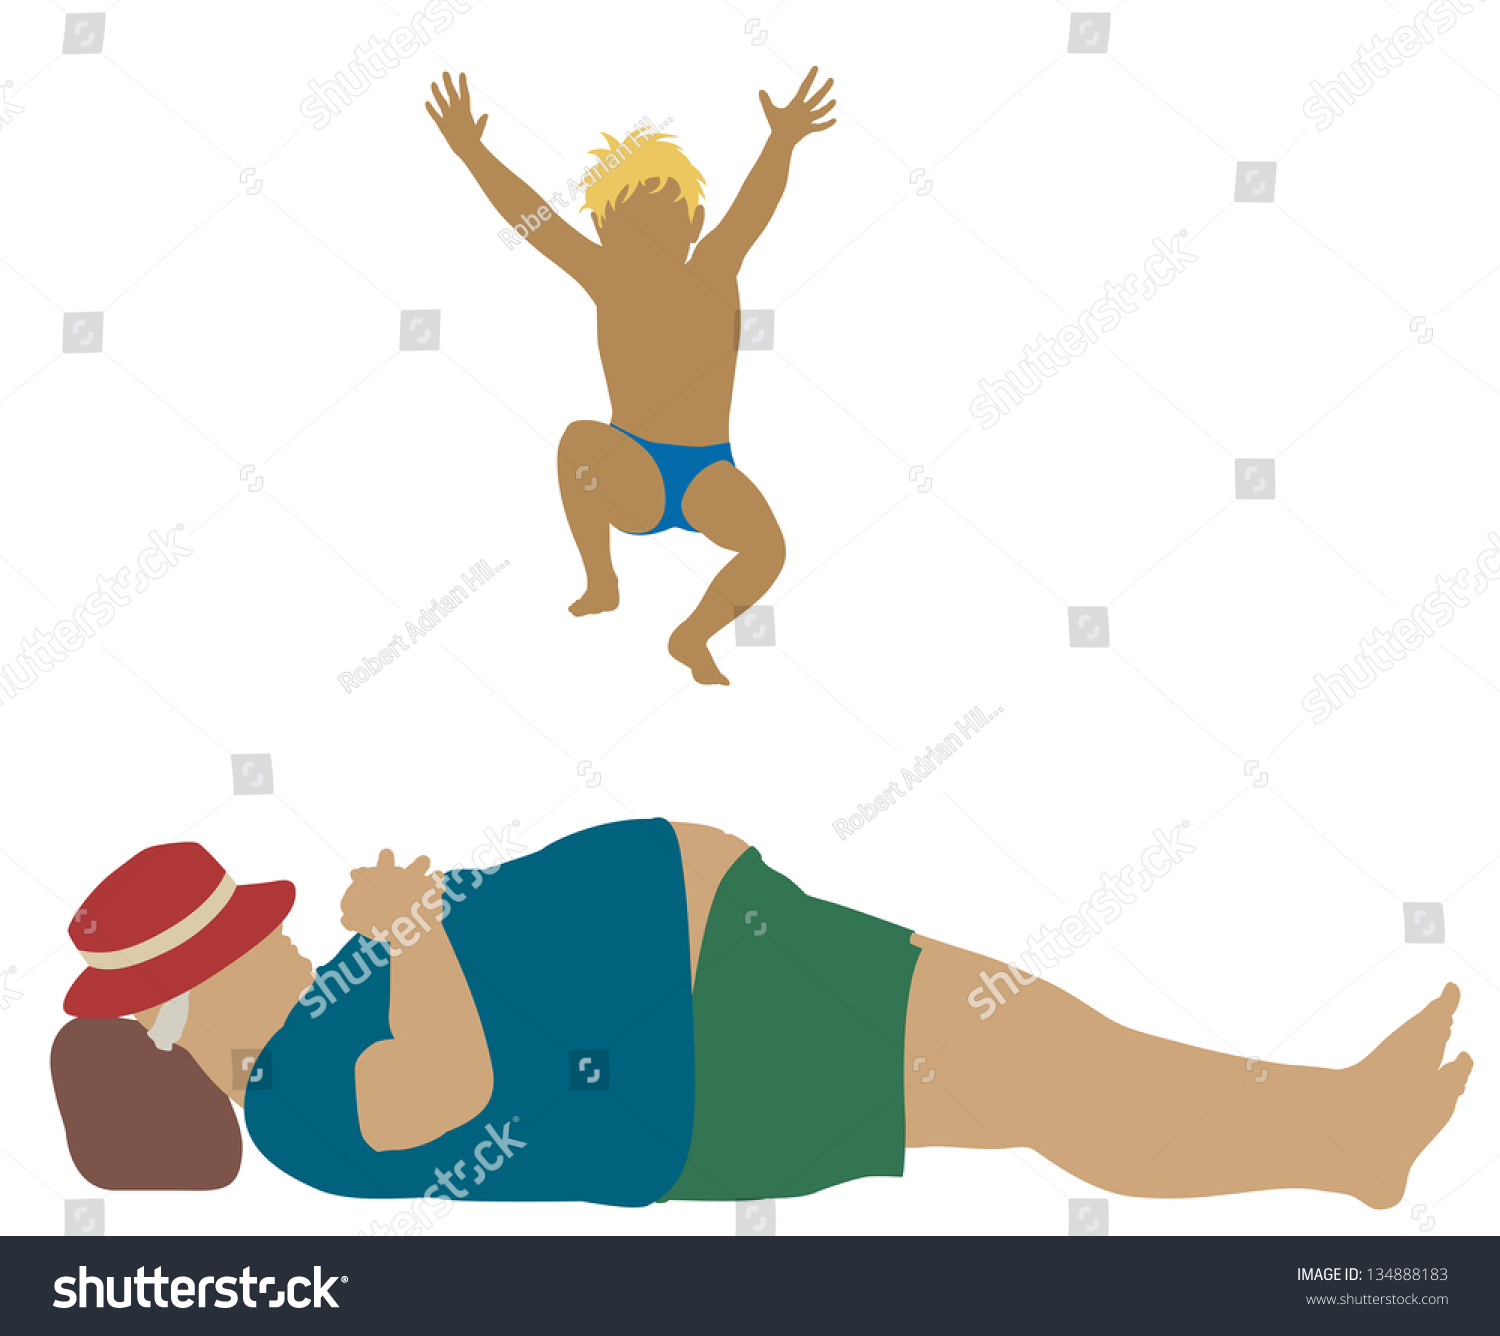 Editable Vector Cartoon Illustration Of A Young Boy Jumping Onto A